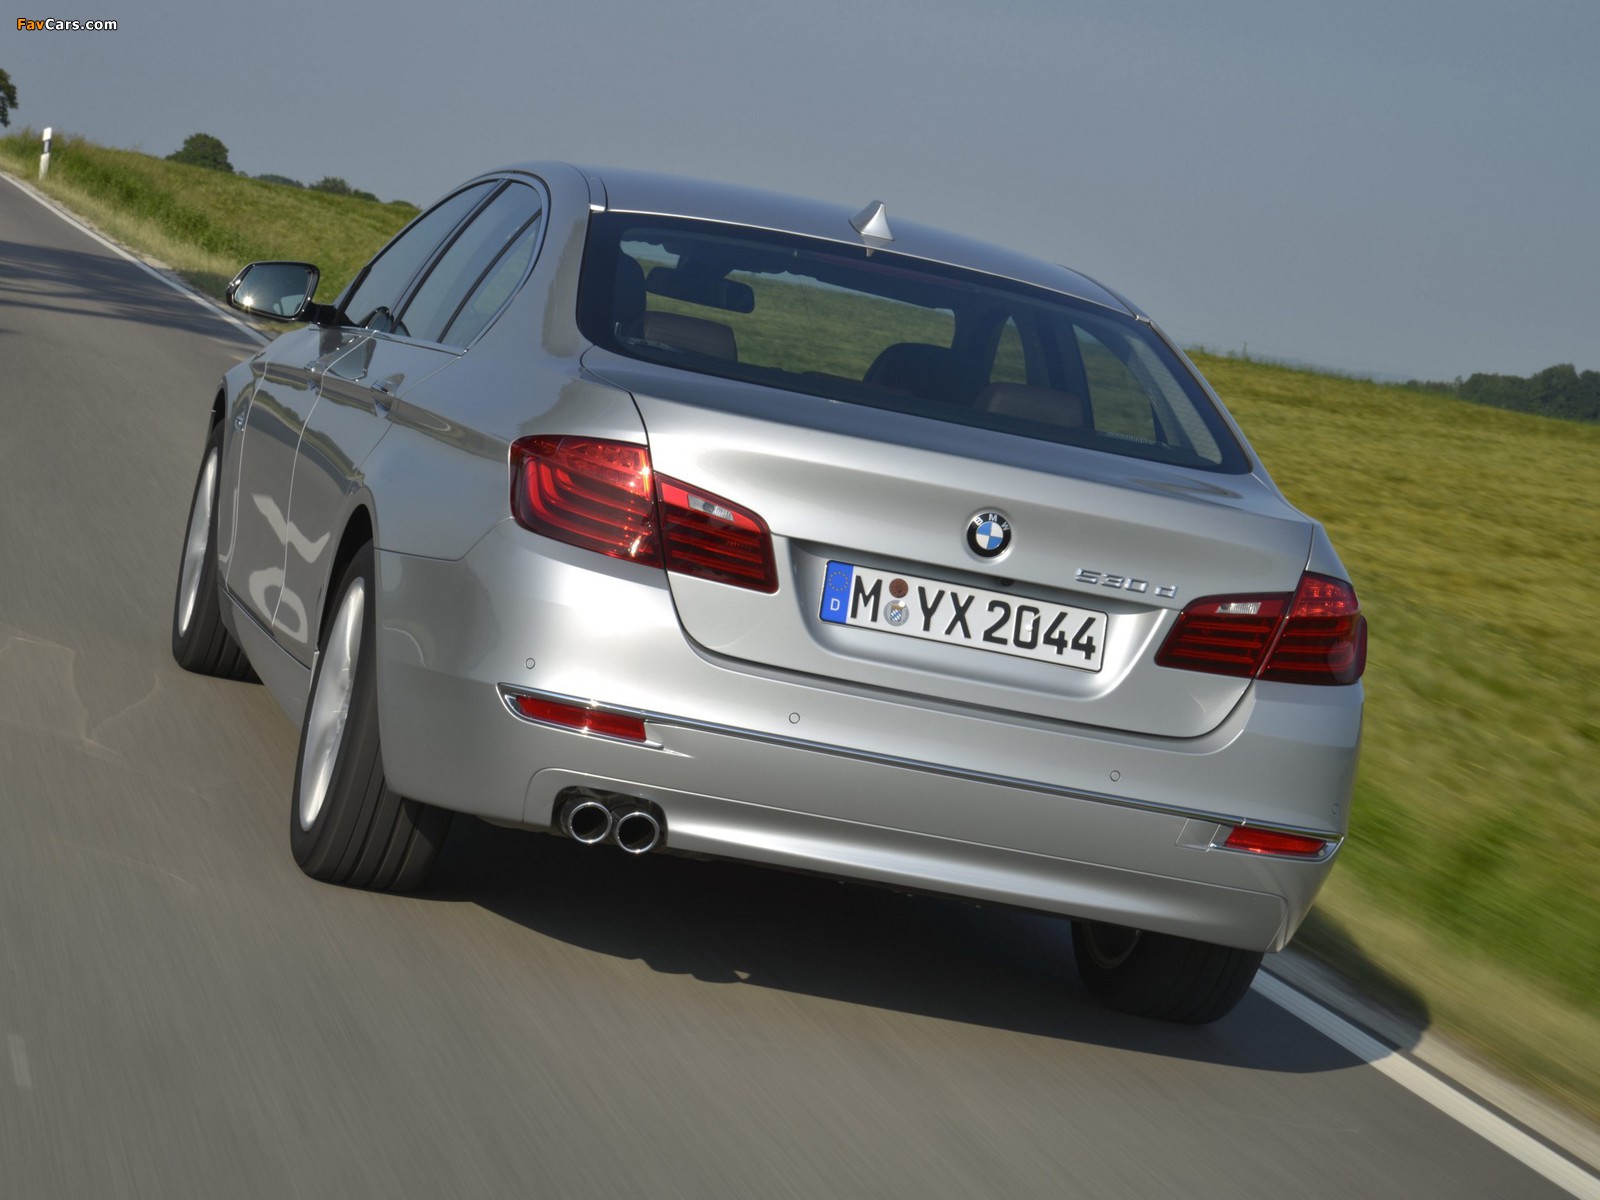 BMW 530d Sedan Luxury Line (F10) 2013 images (1600 x 1200)